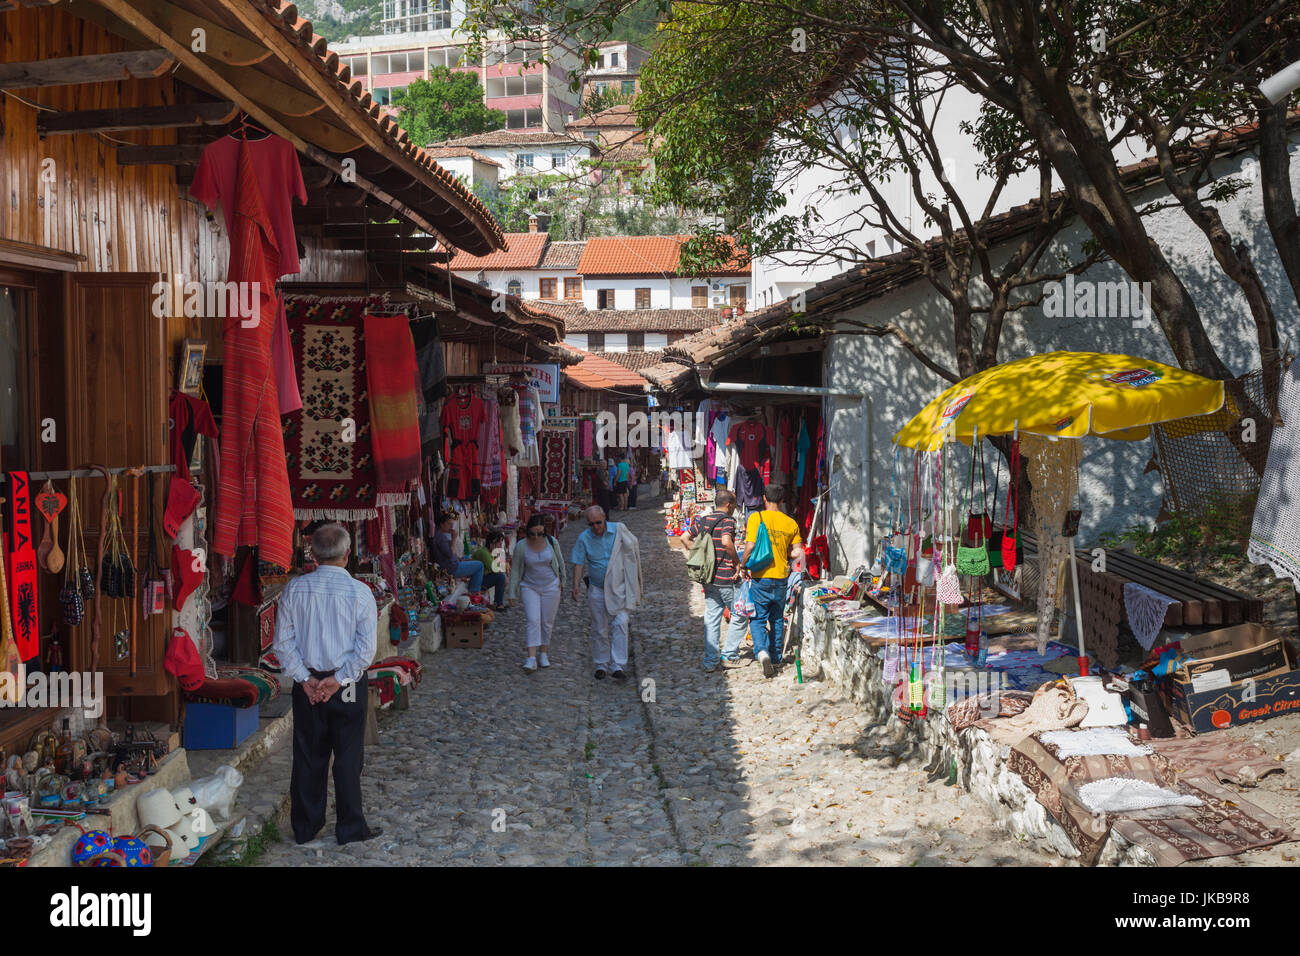 Albania, Kruja, town bazaar Stock Photo - Alamy